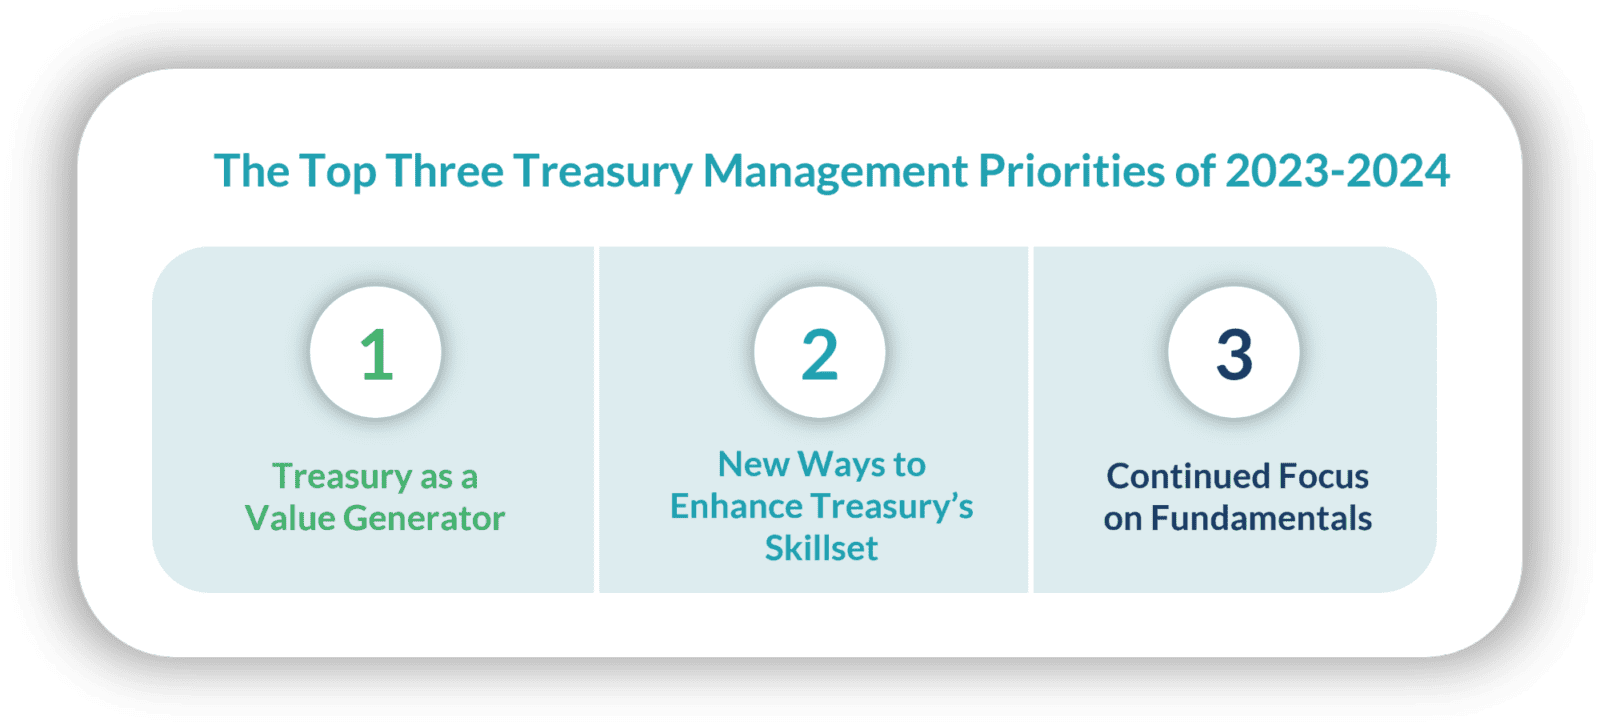 The top three treasury management priorities of 2023-2024.